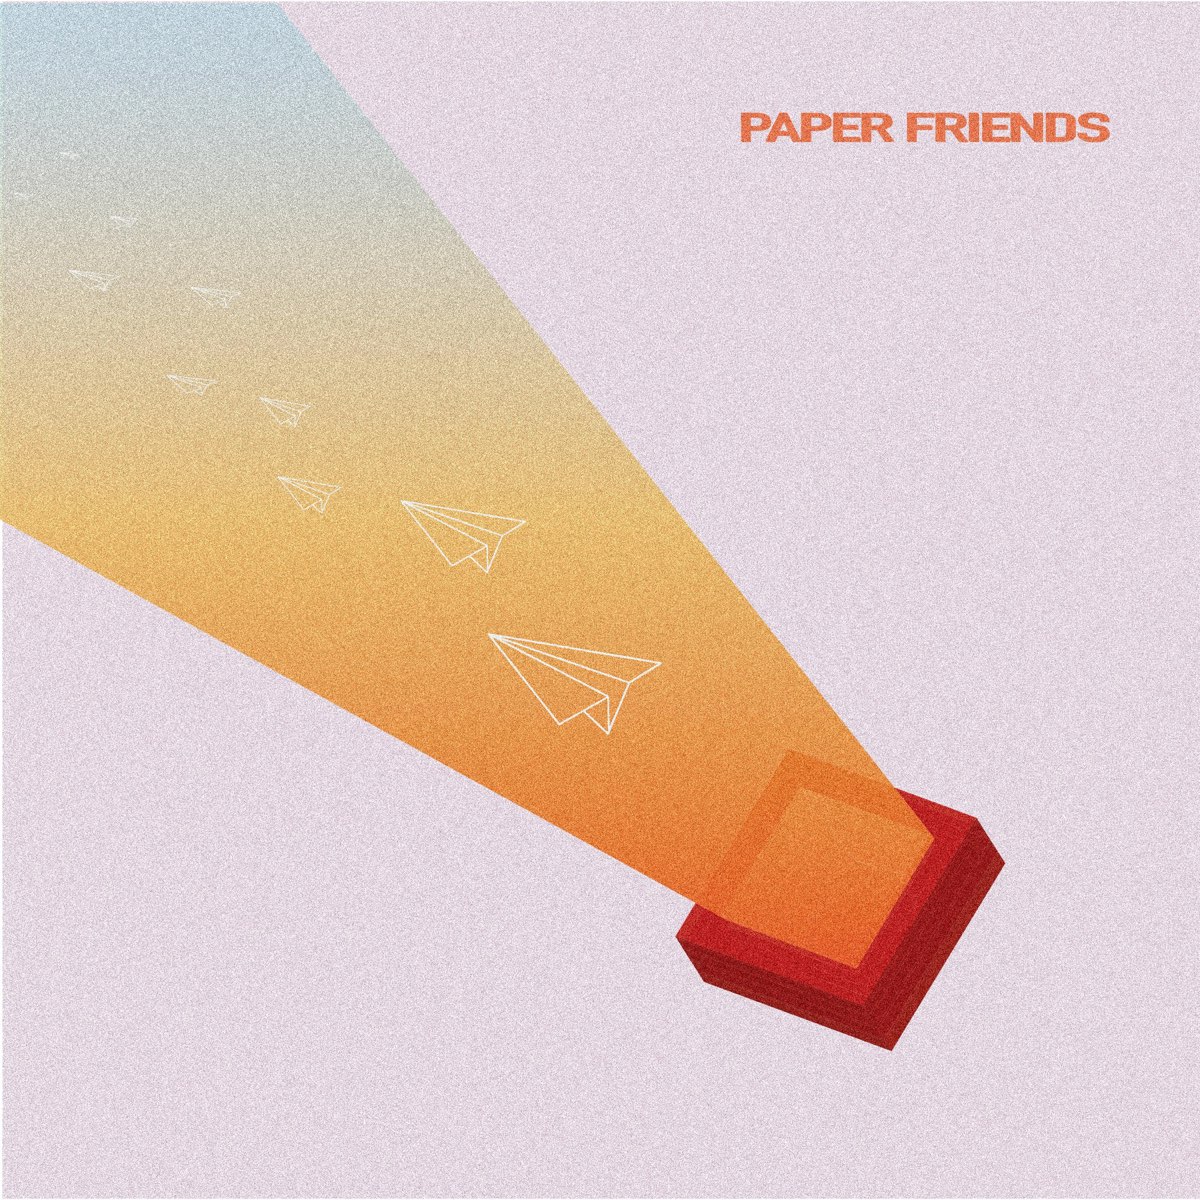 Paper friends. Paper friend. Paper for Friendship. Kuririn paper Frend.